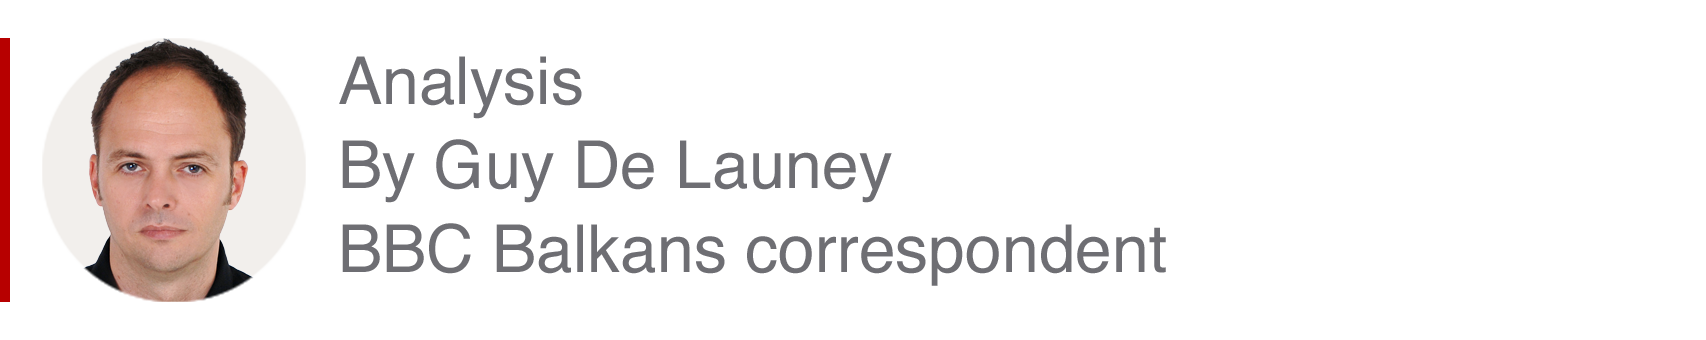 Analysis box by Guy De Launey, Balkans correspondent